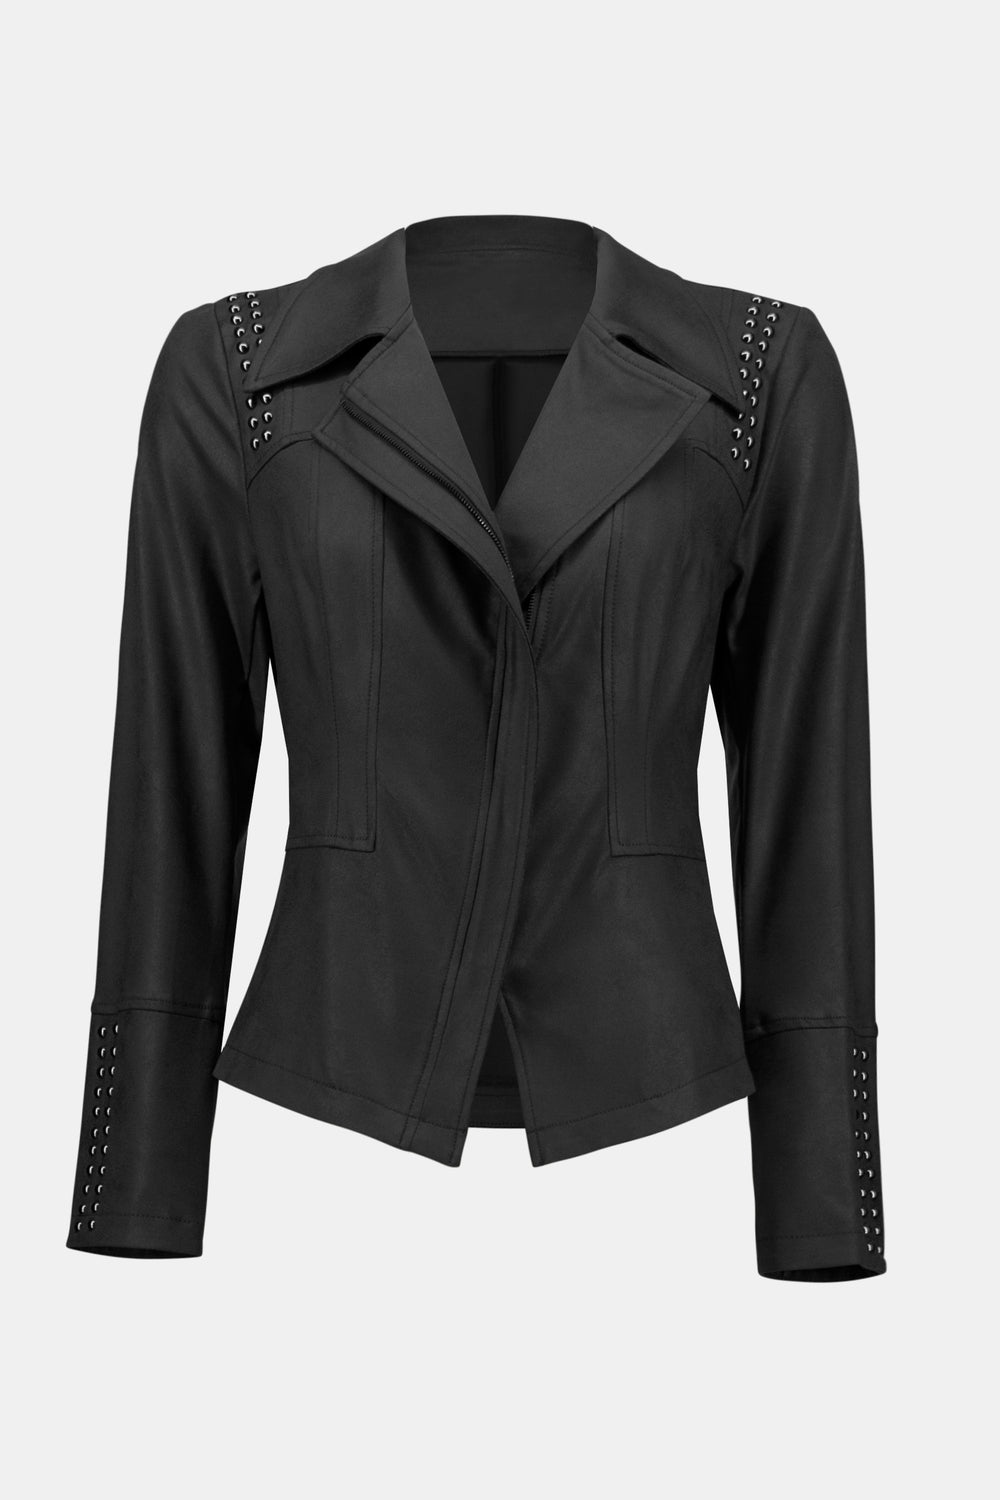 Joseph Ribkoff Notched Collar Jacket Style 233926 - Black